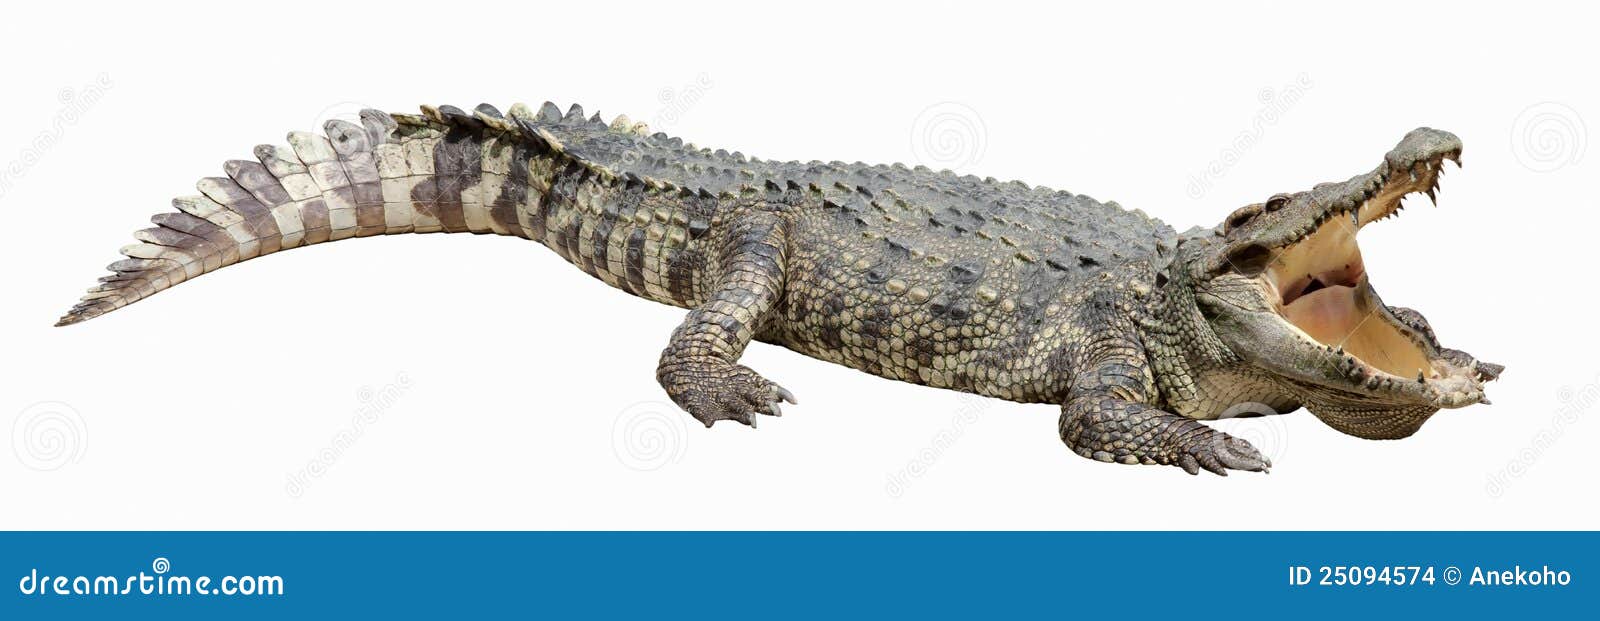 Asian Crocodile 38